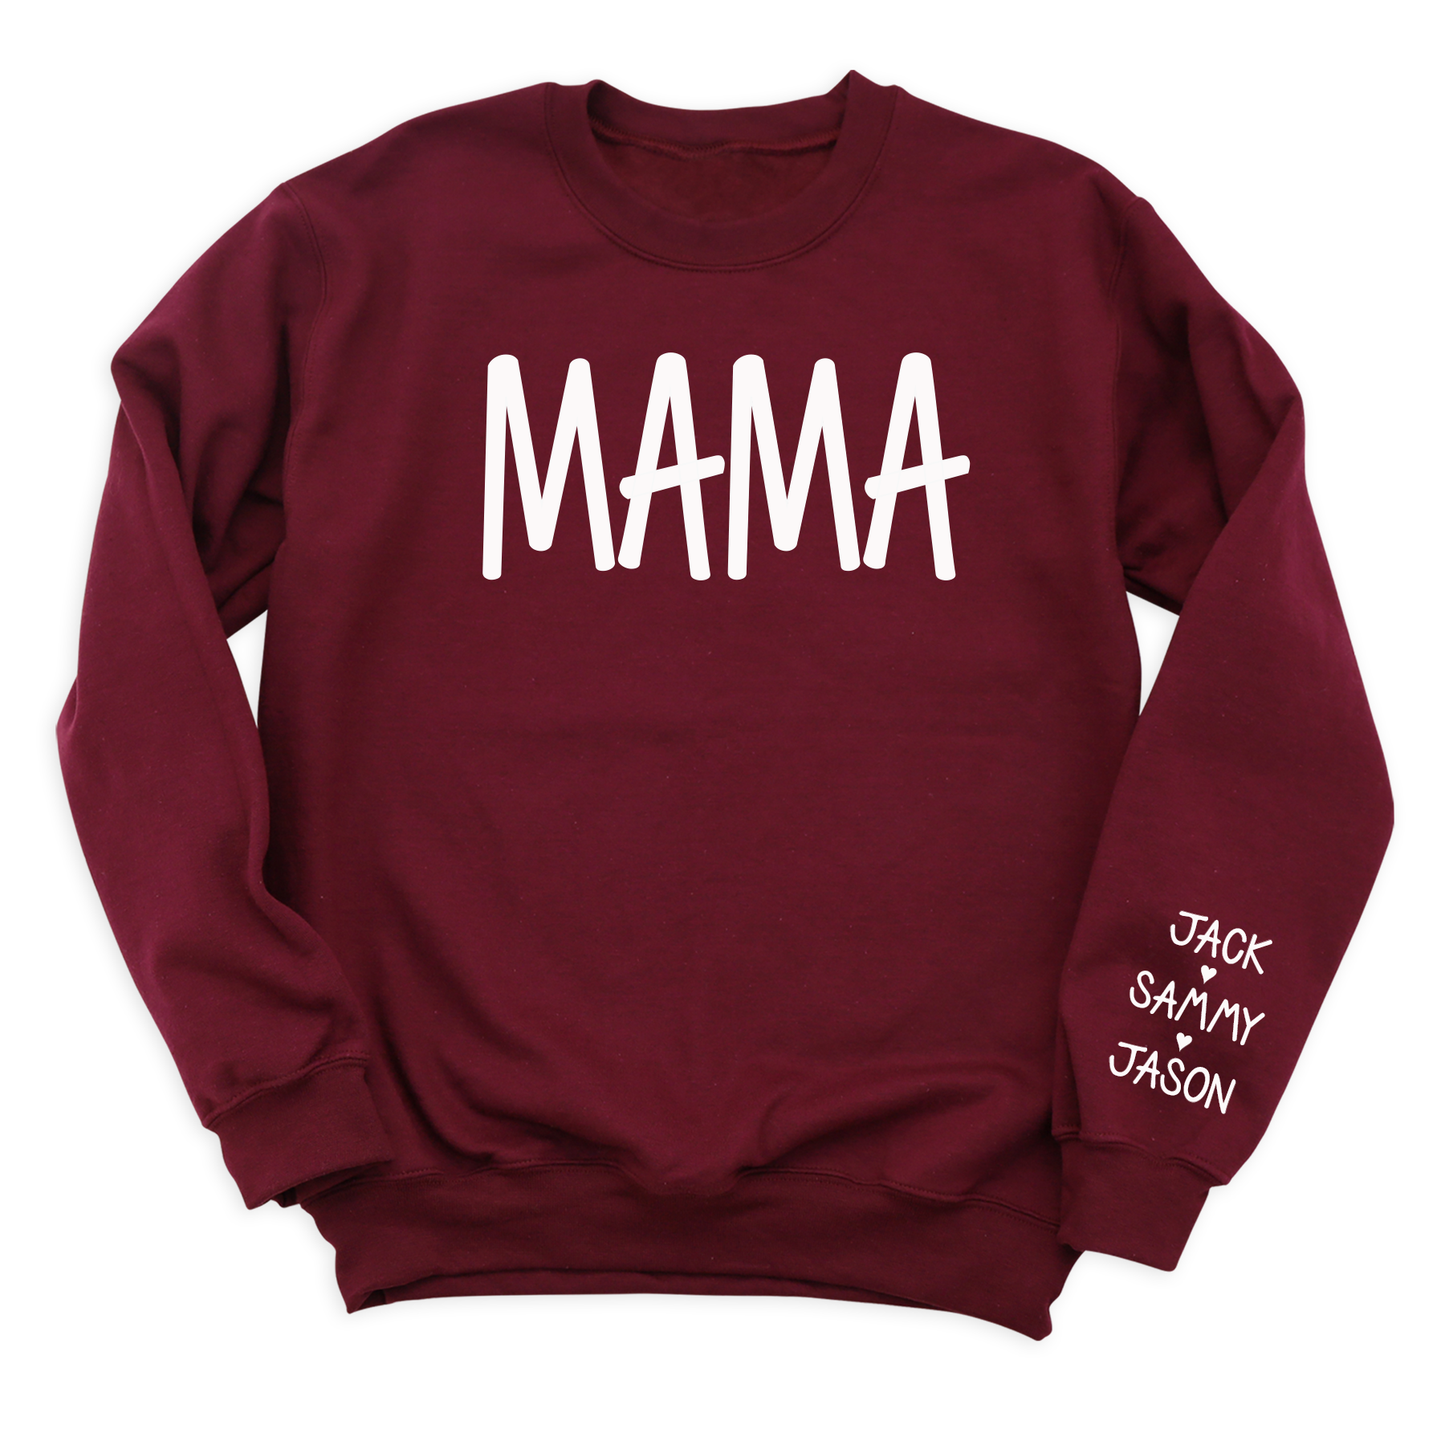 Custom Mama Sweatshirt with Kid's  Name on Sleeve